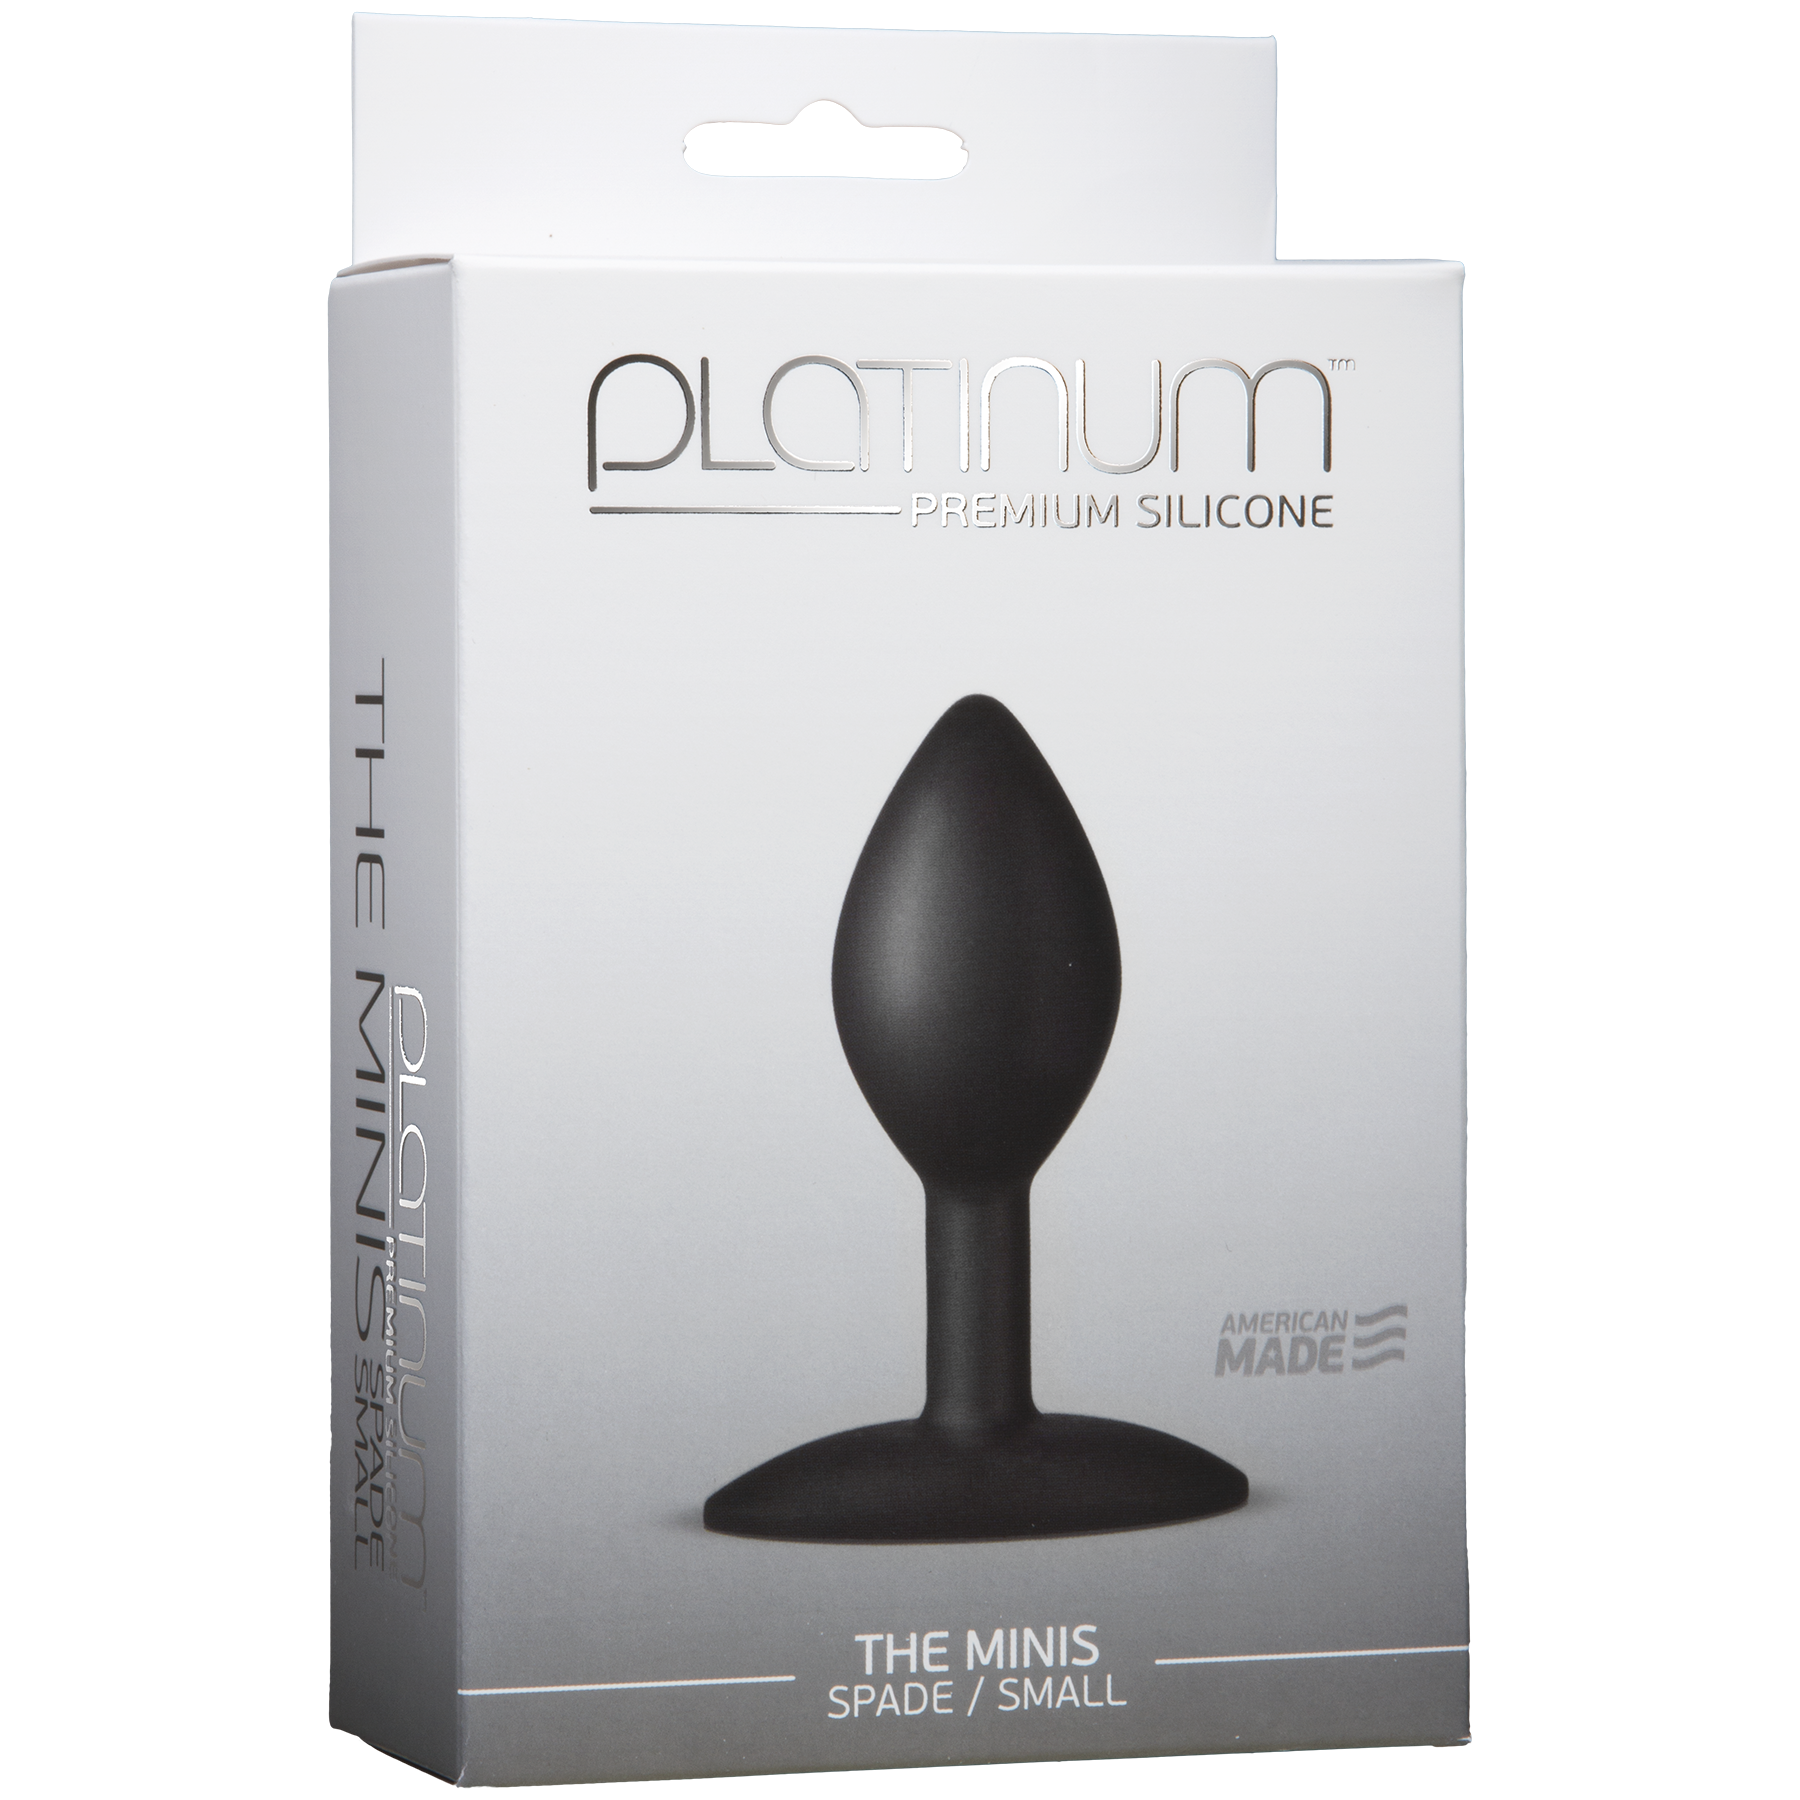 Platinum Premium Silicone The Mini's Spade - Small, Black - Thorn & Feather